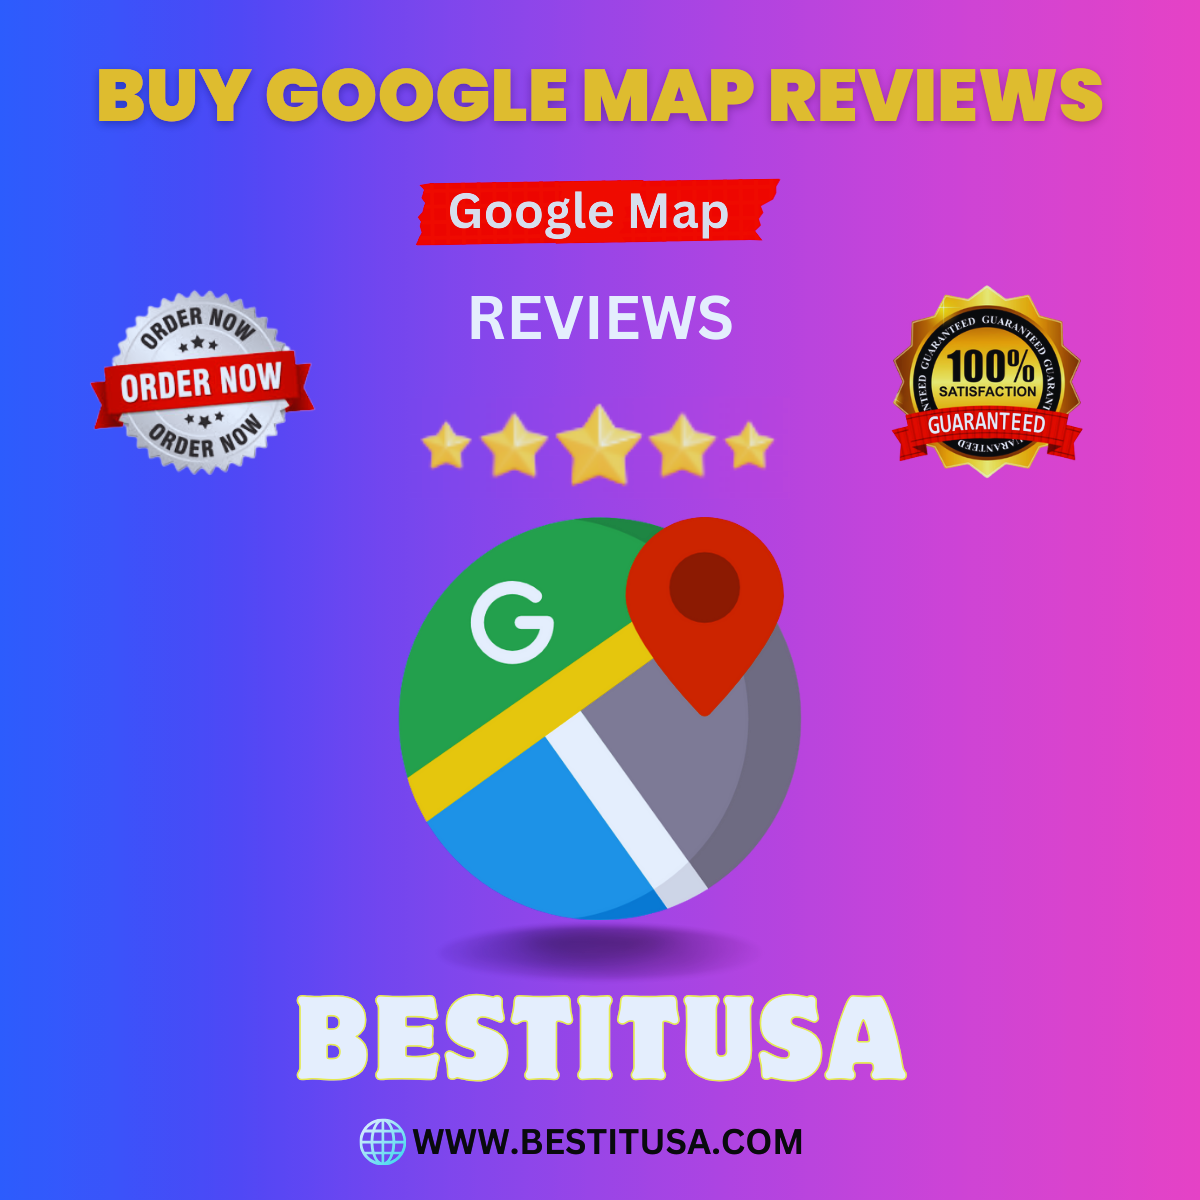 BUY GOOGLE MAP REVIEWS - BestItUsa